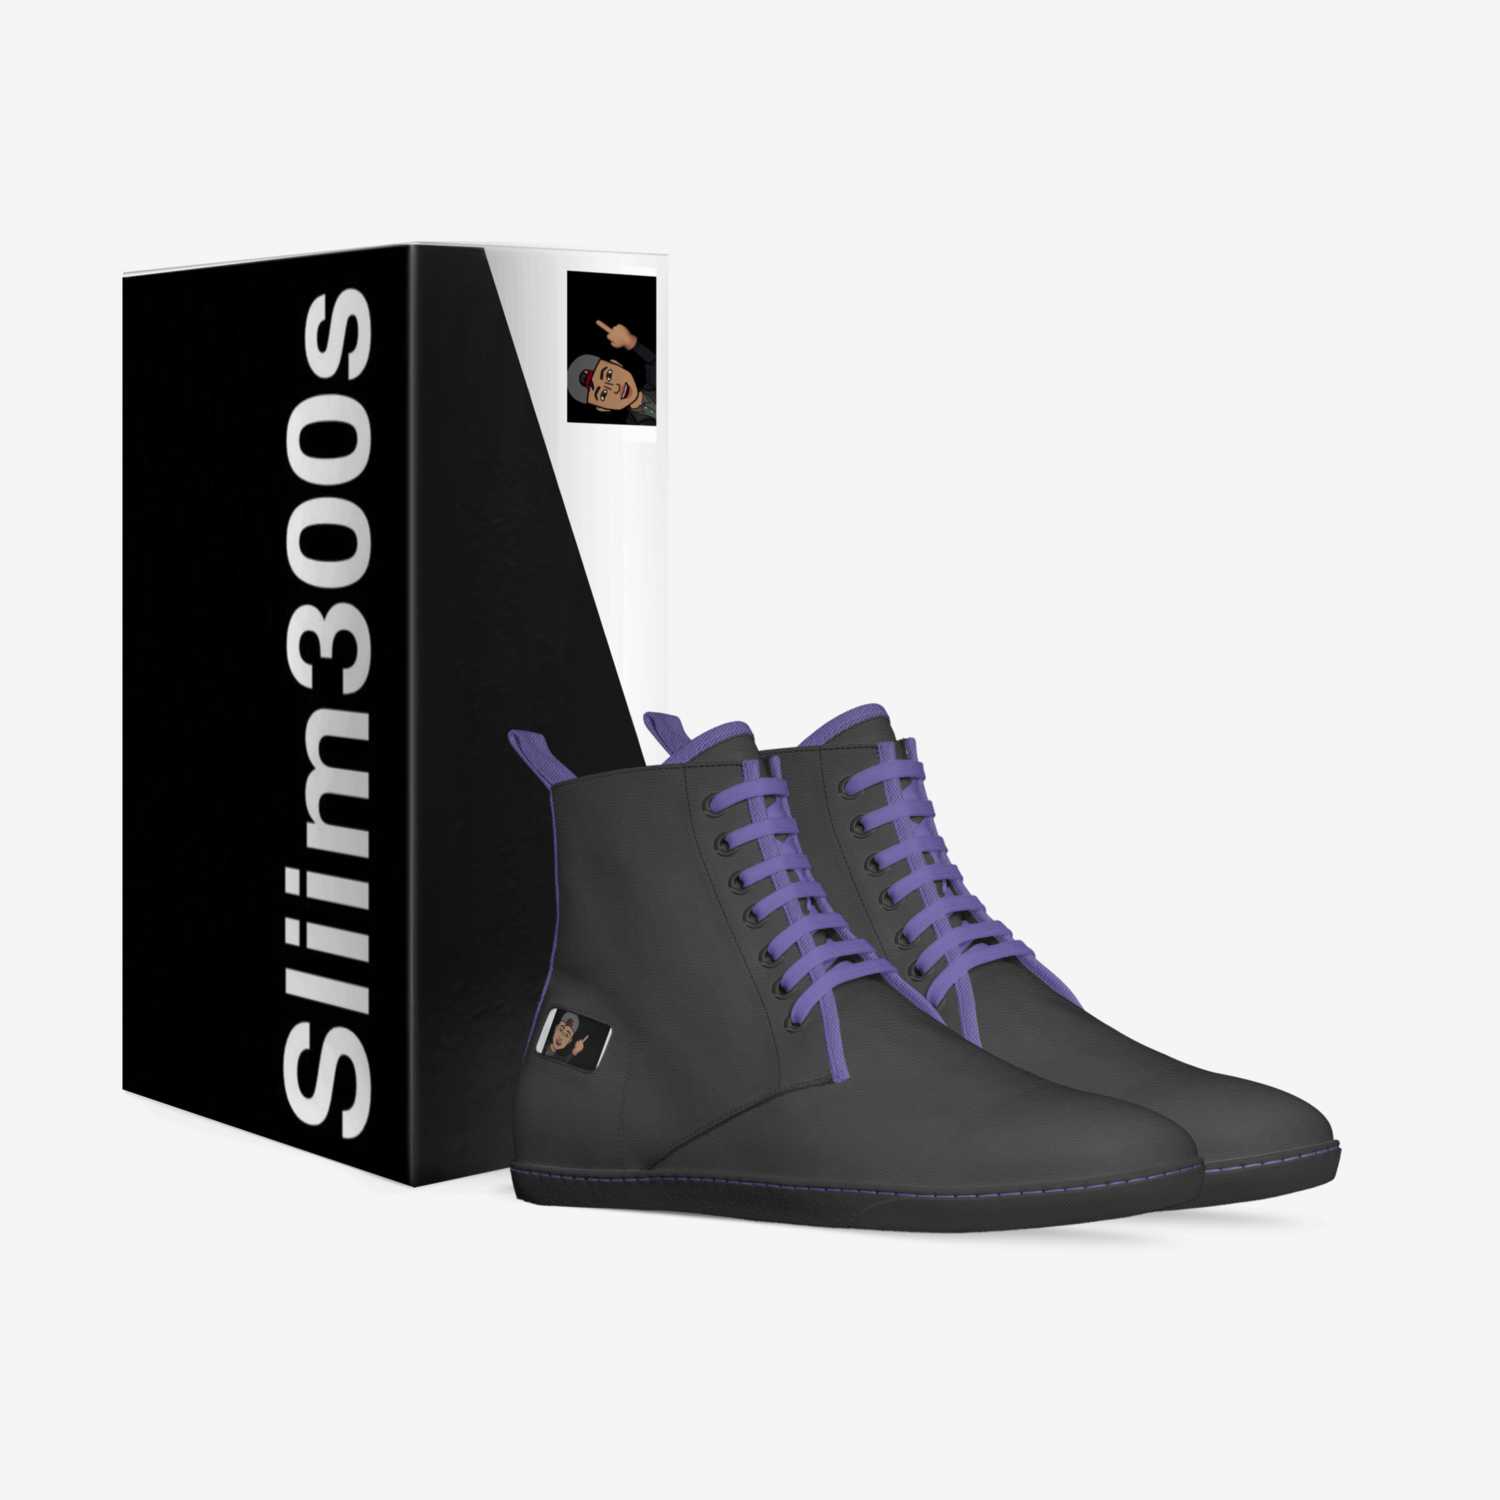 Sliim300s  custom made in Italy shoes by Cornelia Moore | Box view